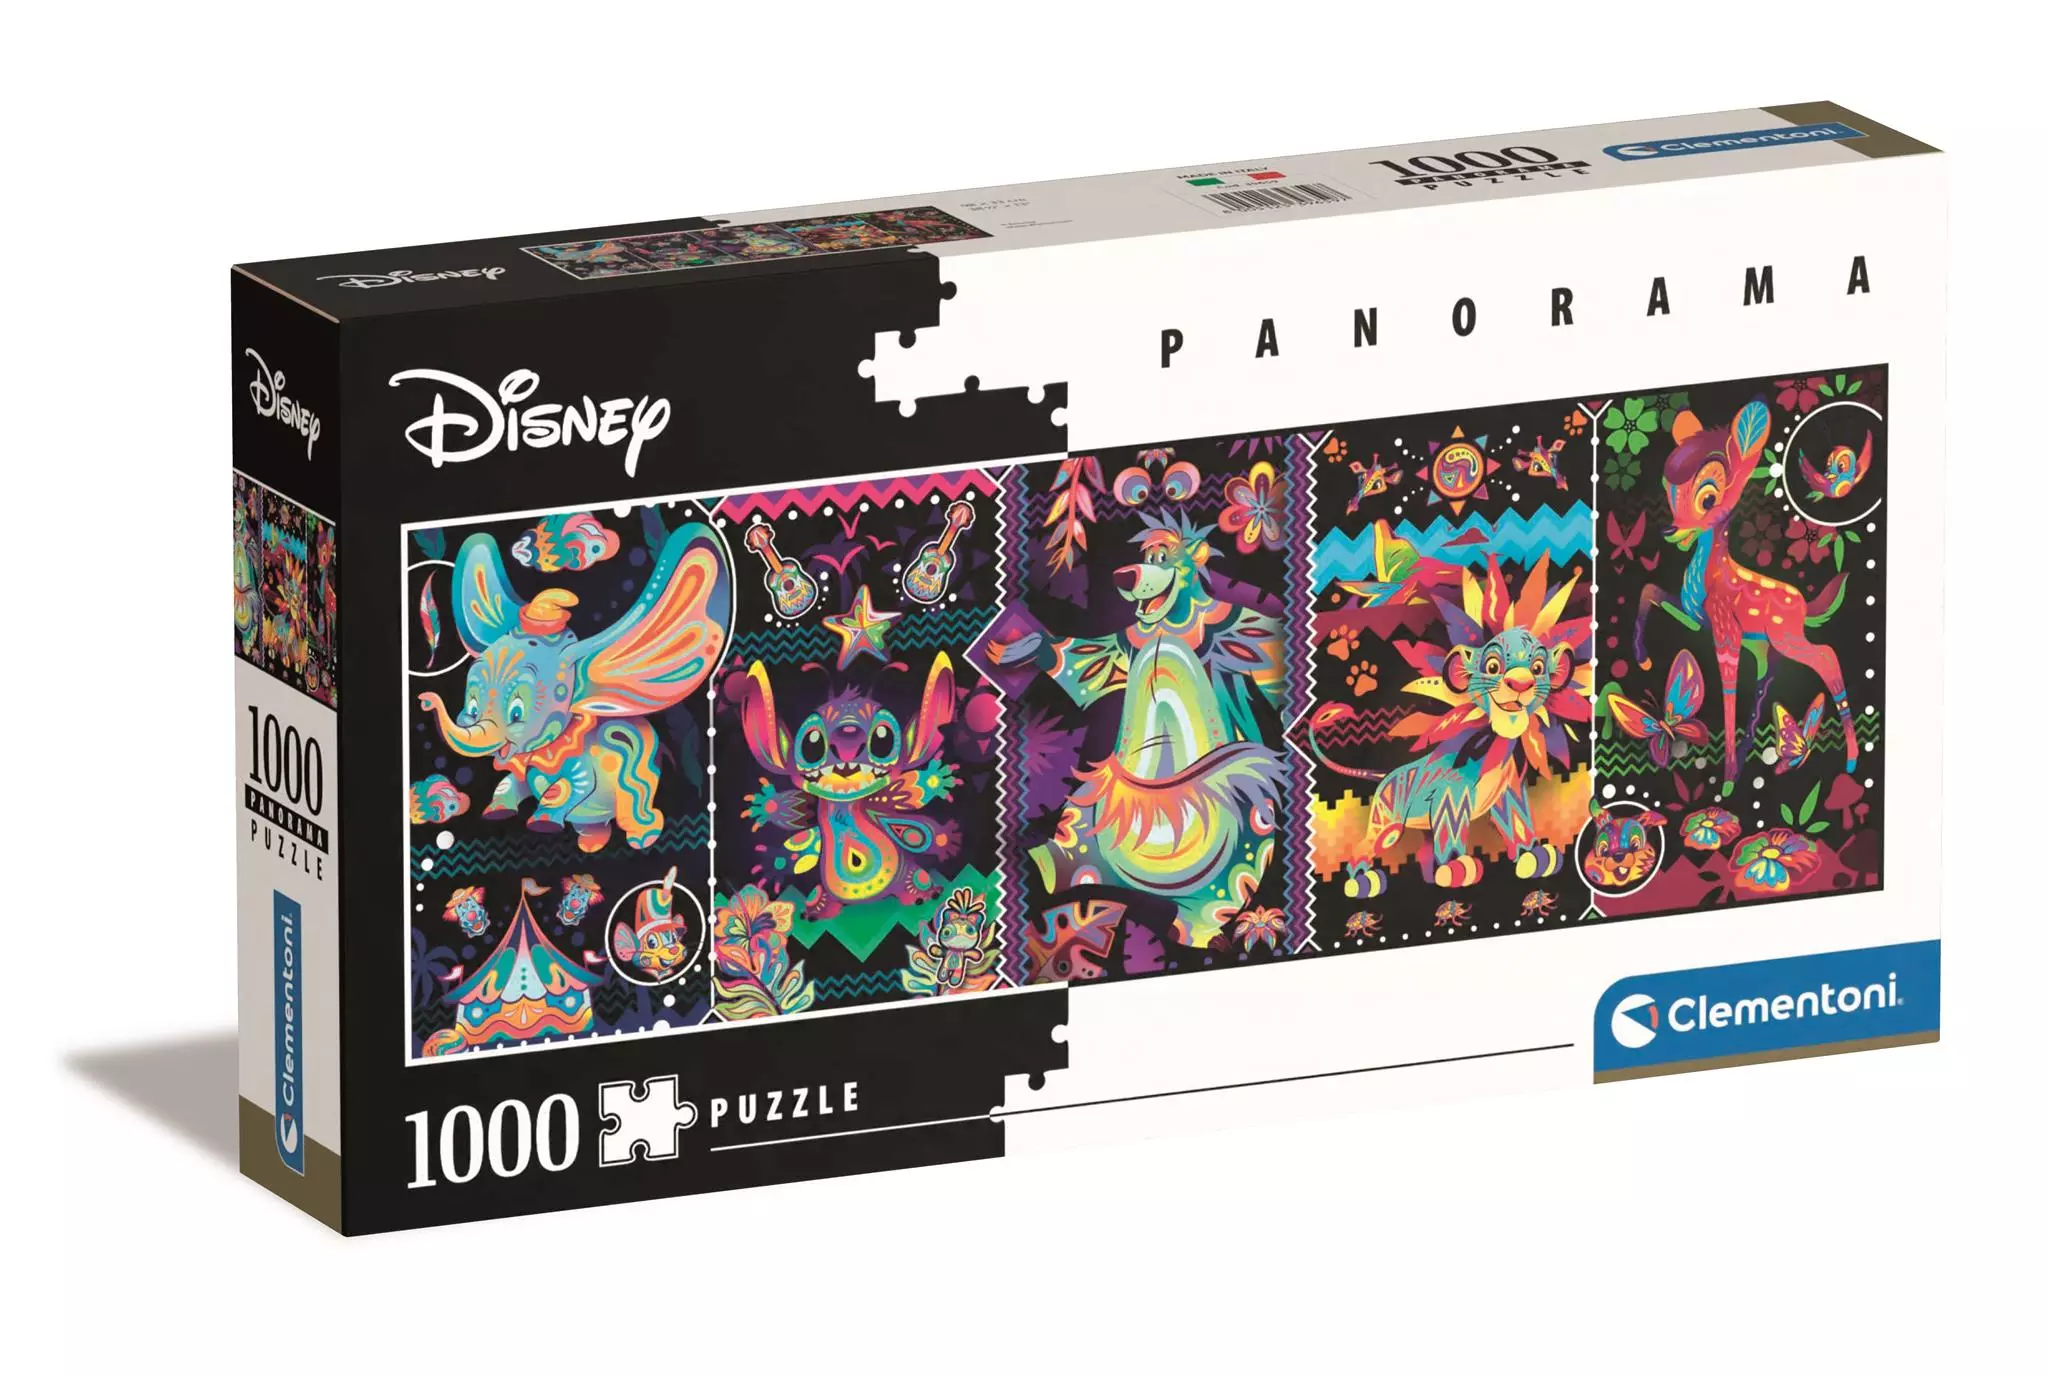 Clementoni Panorama Puzzle 1000 Pcs Disney